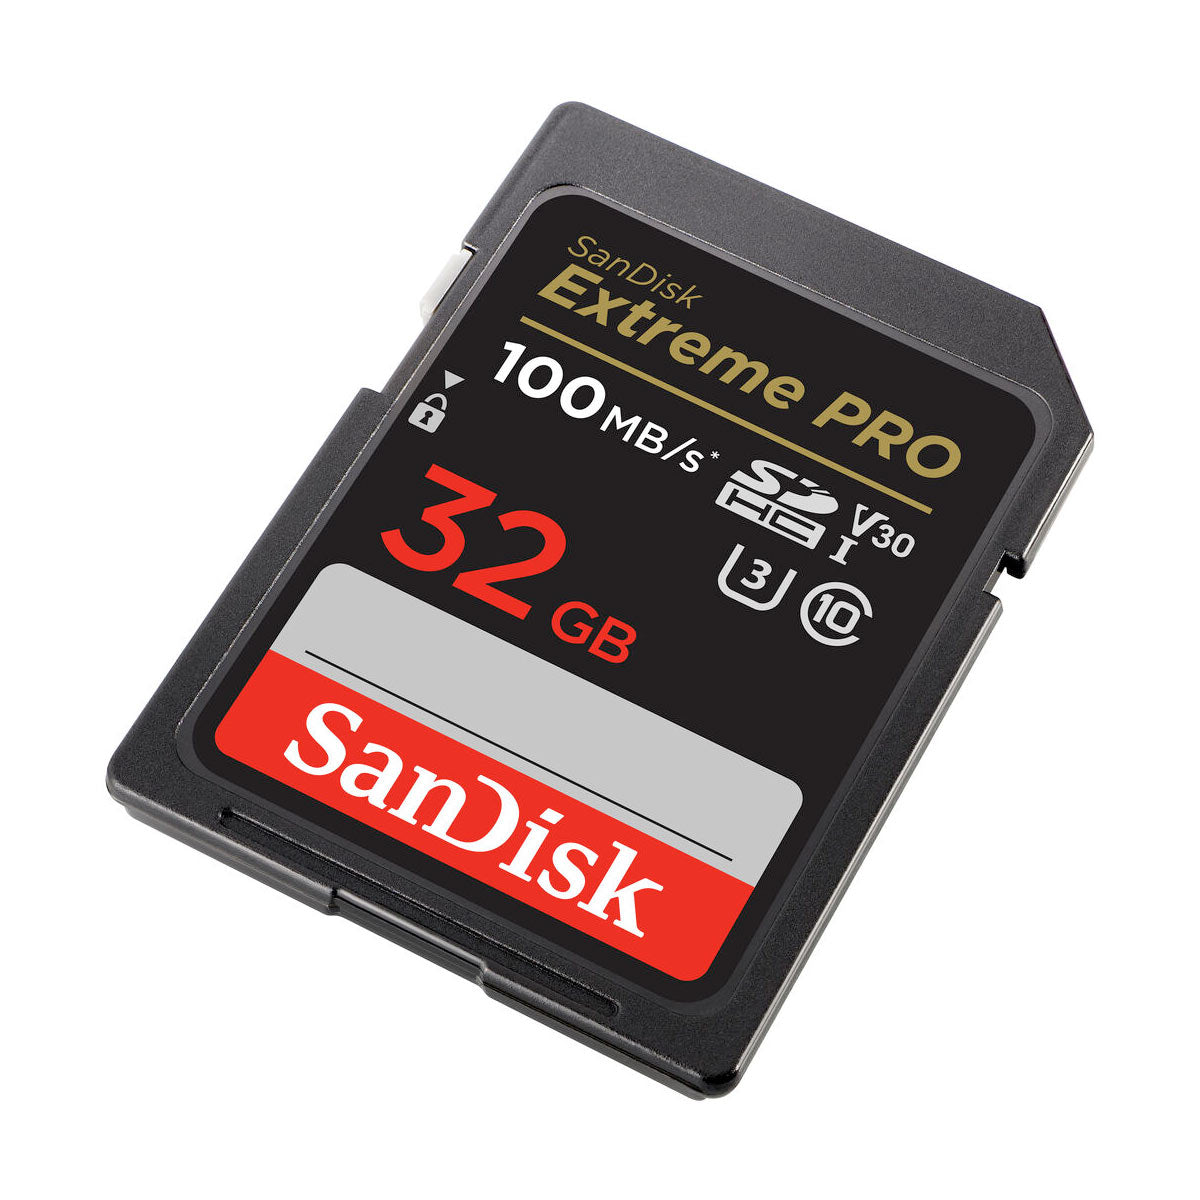 SanDisk 32GB Extreme PRO UHS-I SDHC (V30) Memory Card 100 MB/s